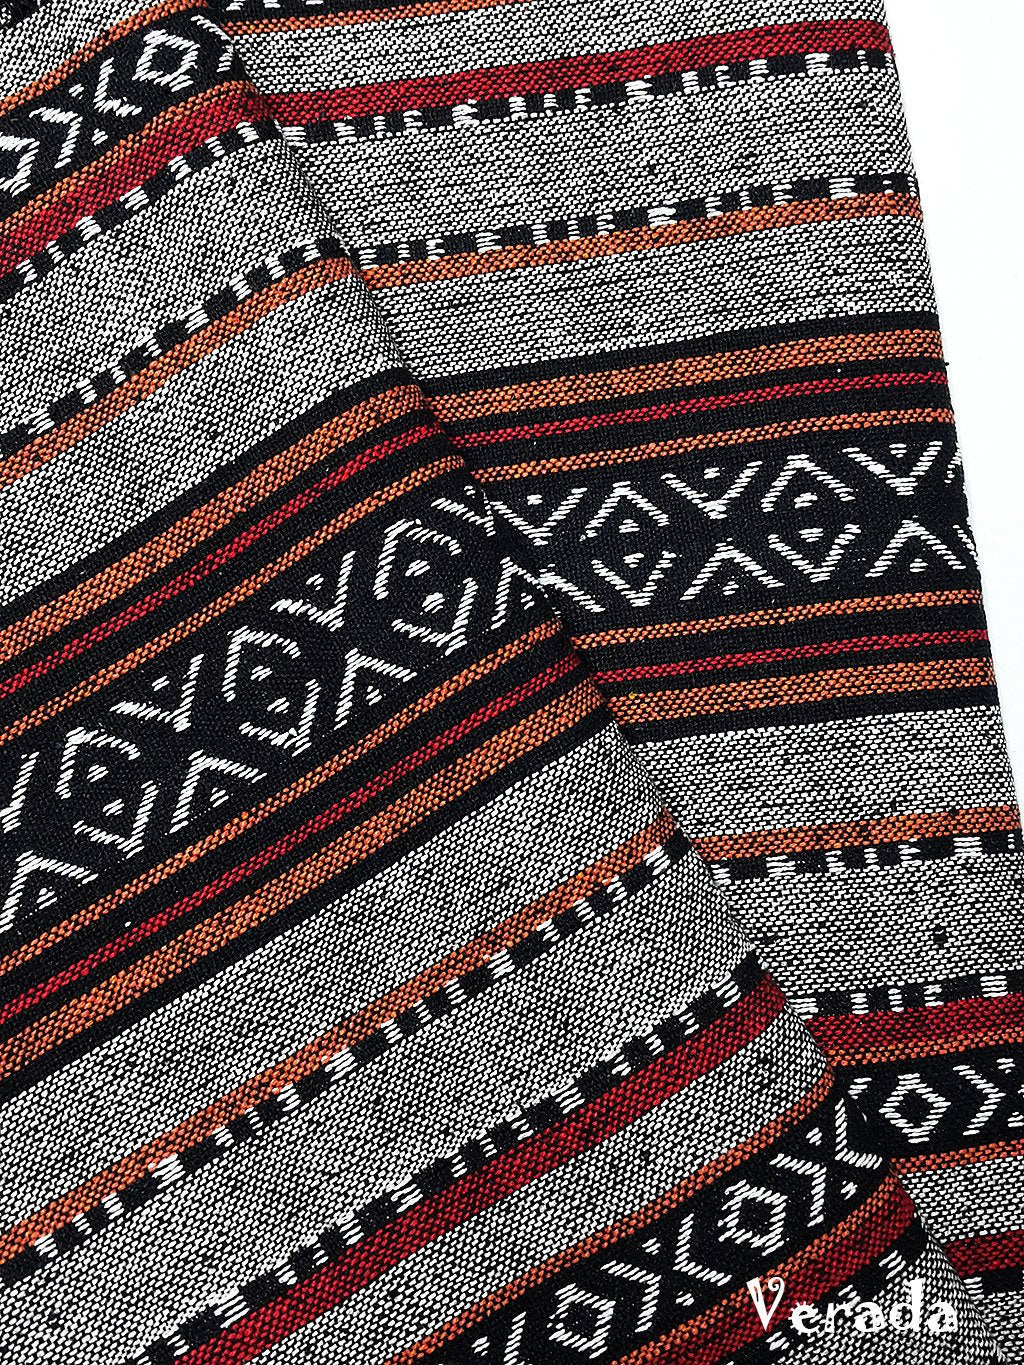 Thai Woven Cotton Tribal Fabric Textile 1/2 yard (WF147)